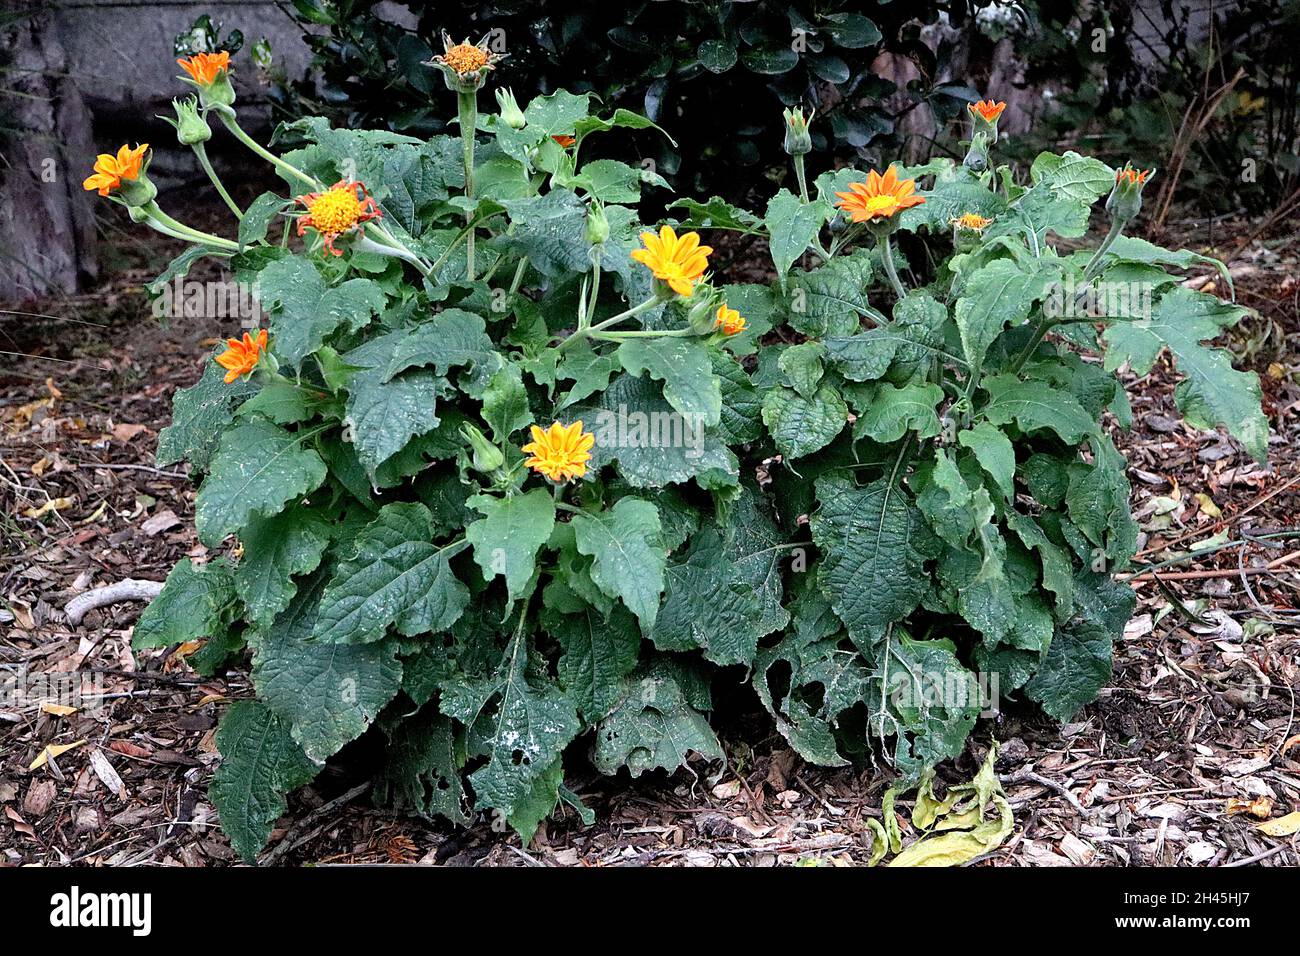 Tithonia rotundifolia ‘Fiesta del Sol’ dwarf Mexican sunflower Fiesta del Sol – bright orange daisy-like flowers and mid green broad ovate leaves Stock Photo